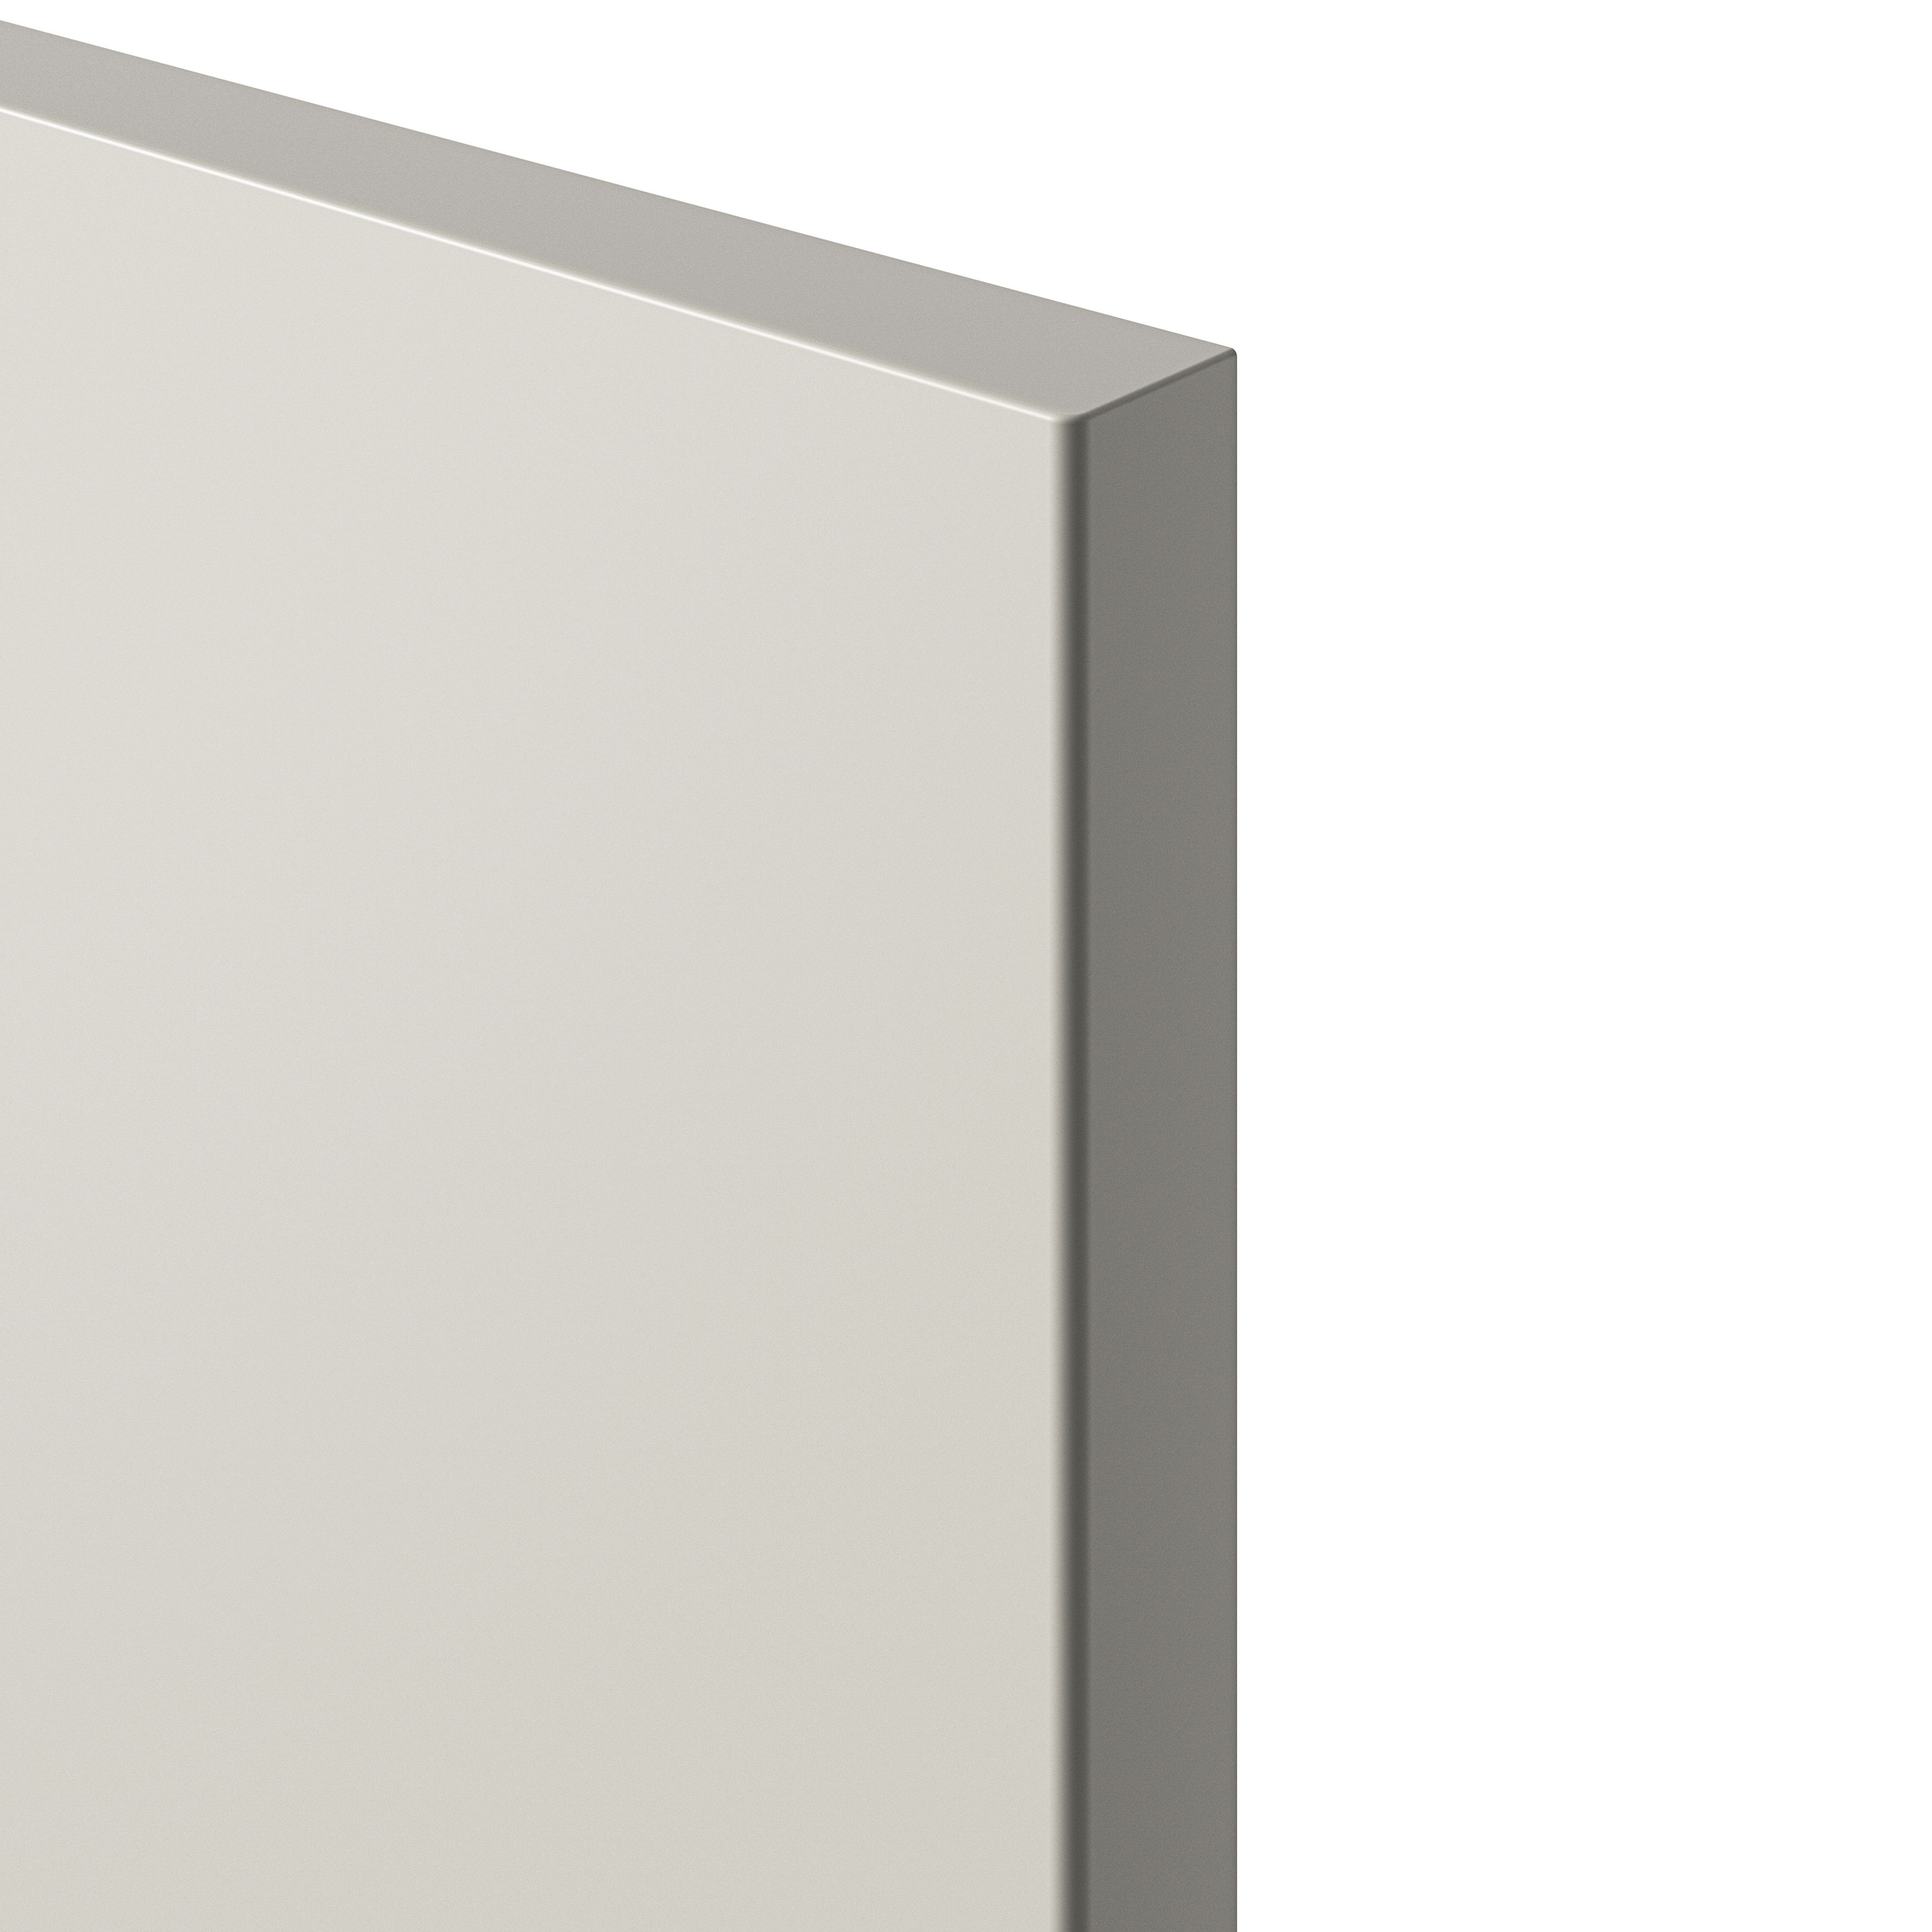 GoodHome Stevia Matt sandstone slab Highline Cabinet door (W)600mm (H)715mm (T)18mm